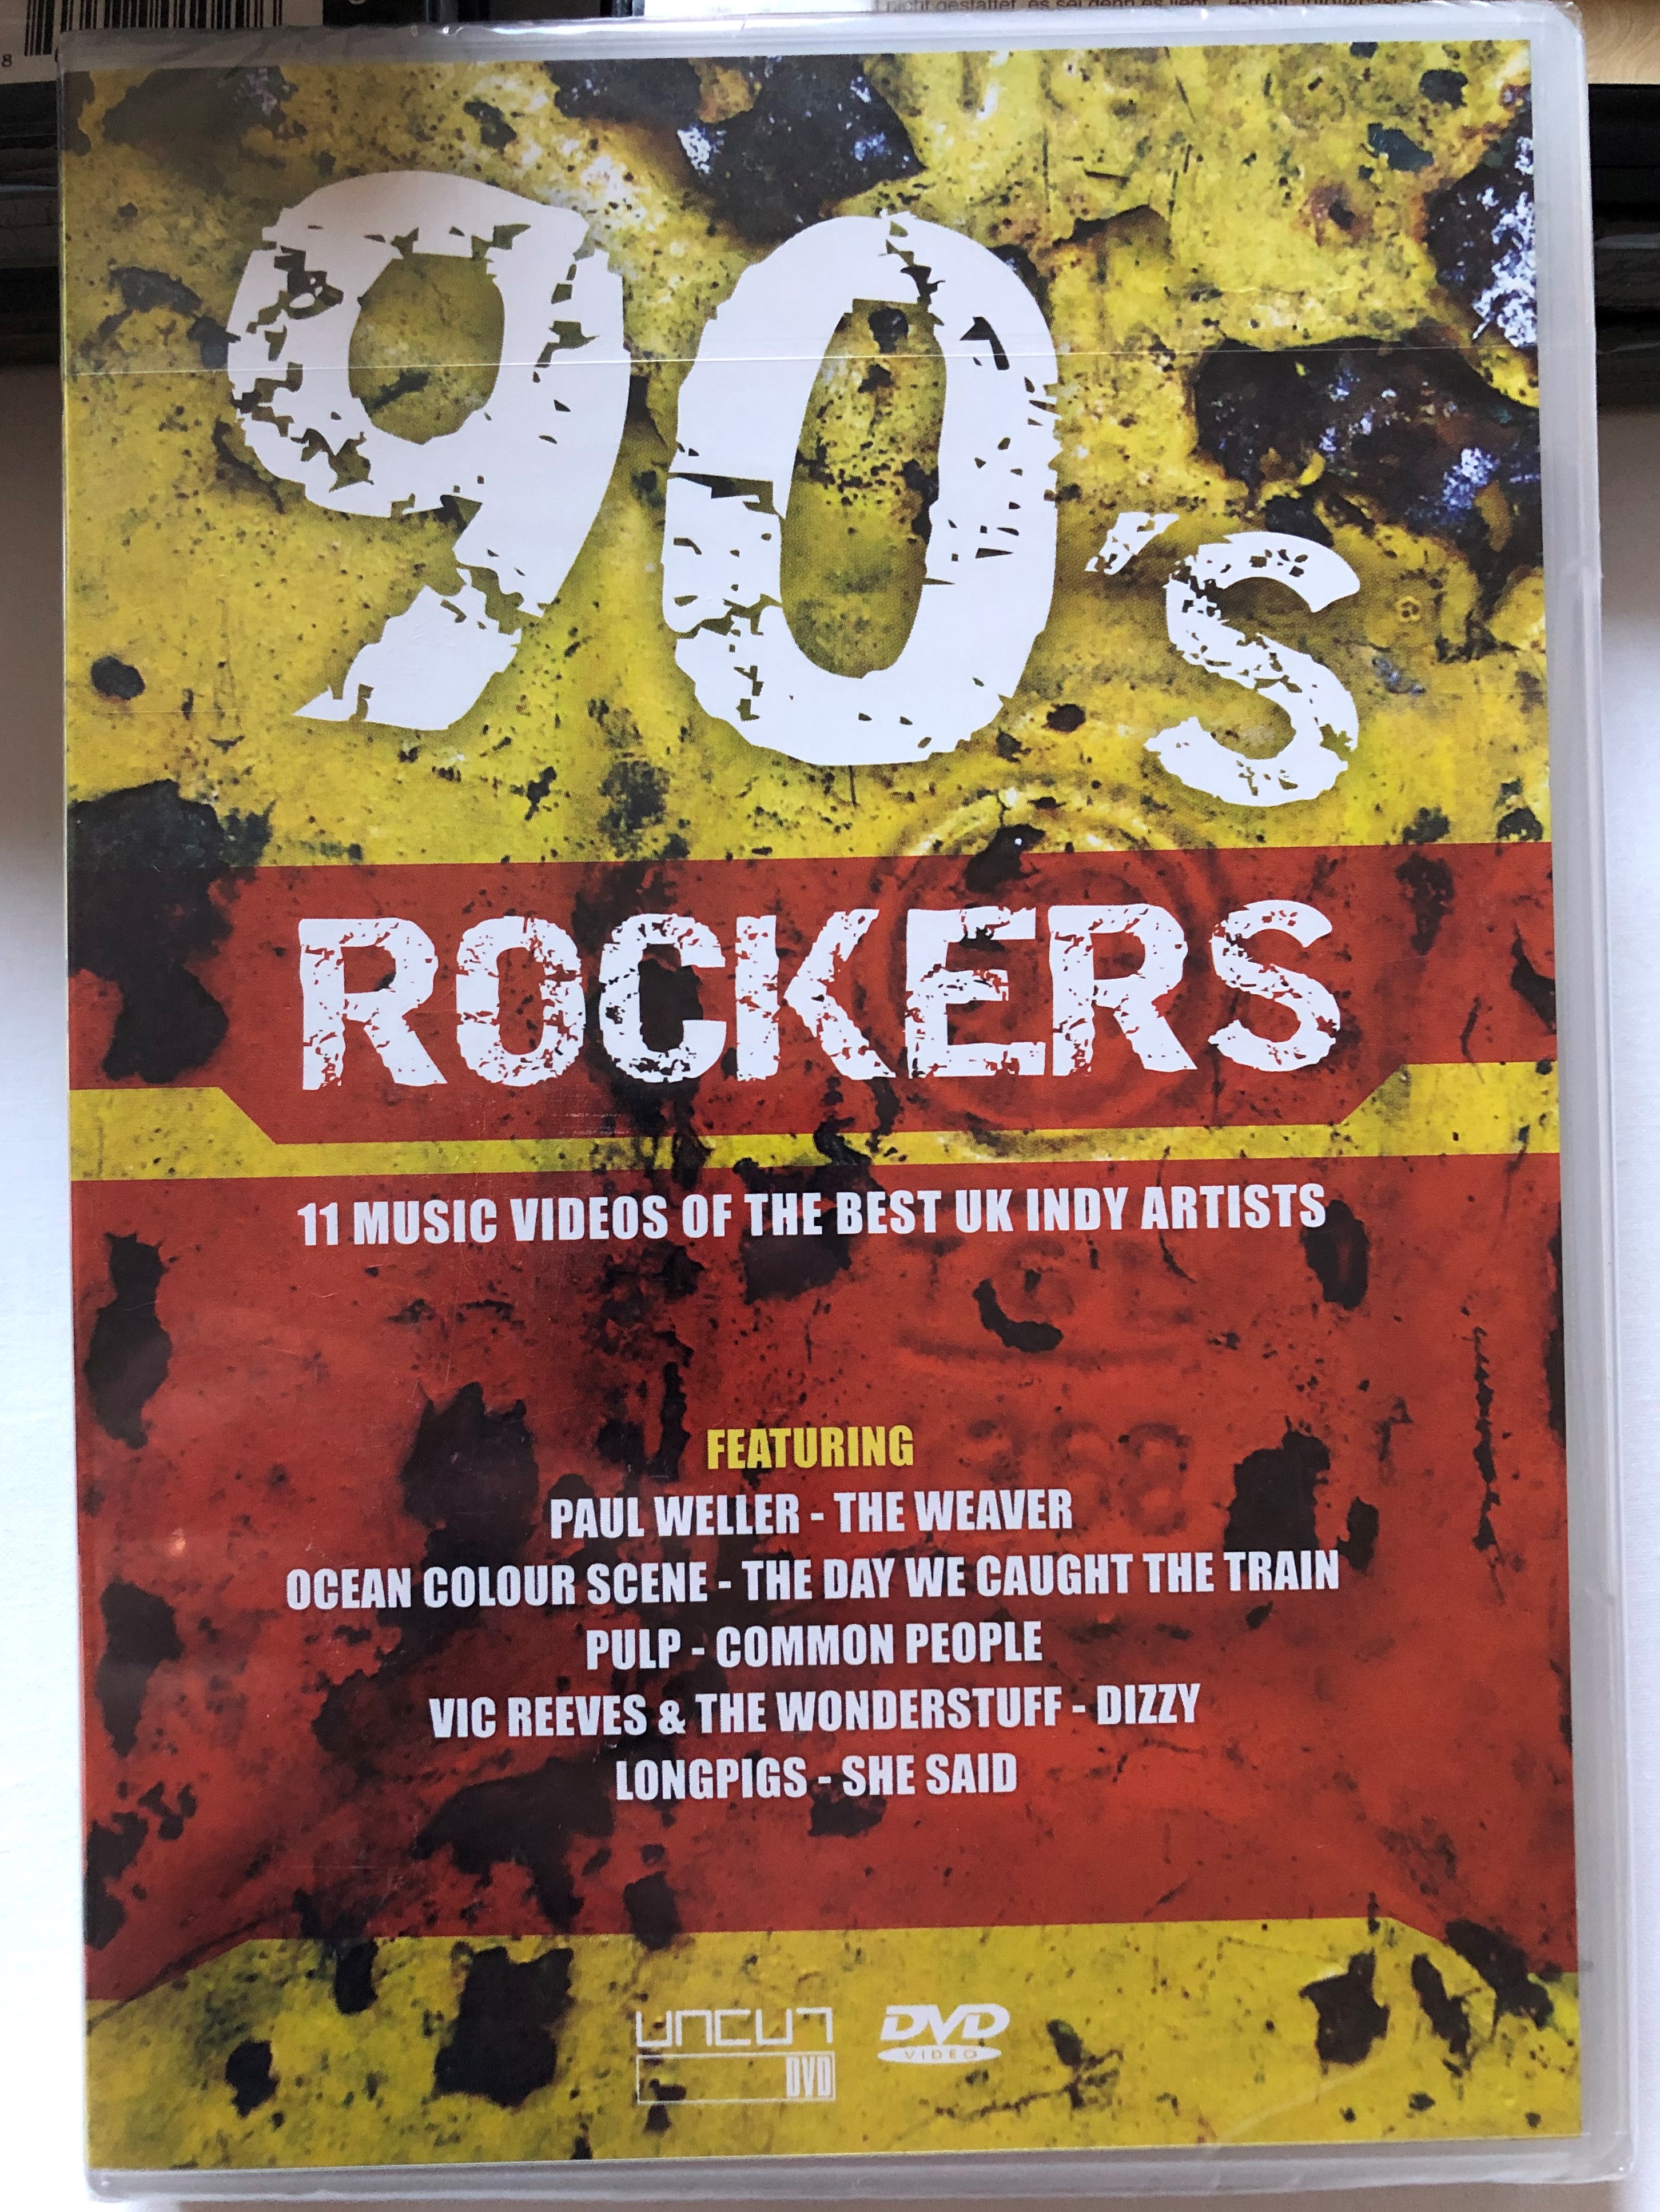 90-s-rockers-dvd-2004-11-music-videos-of-the-best-uk-indy-artists-featuring-paul-weller-ocean-colour-scene-pulp-vic-reeves-the-wonderstuff-longpigs-cuts-1051-1-.jpg